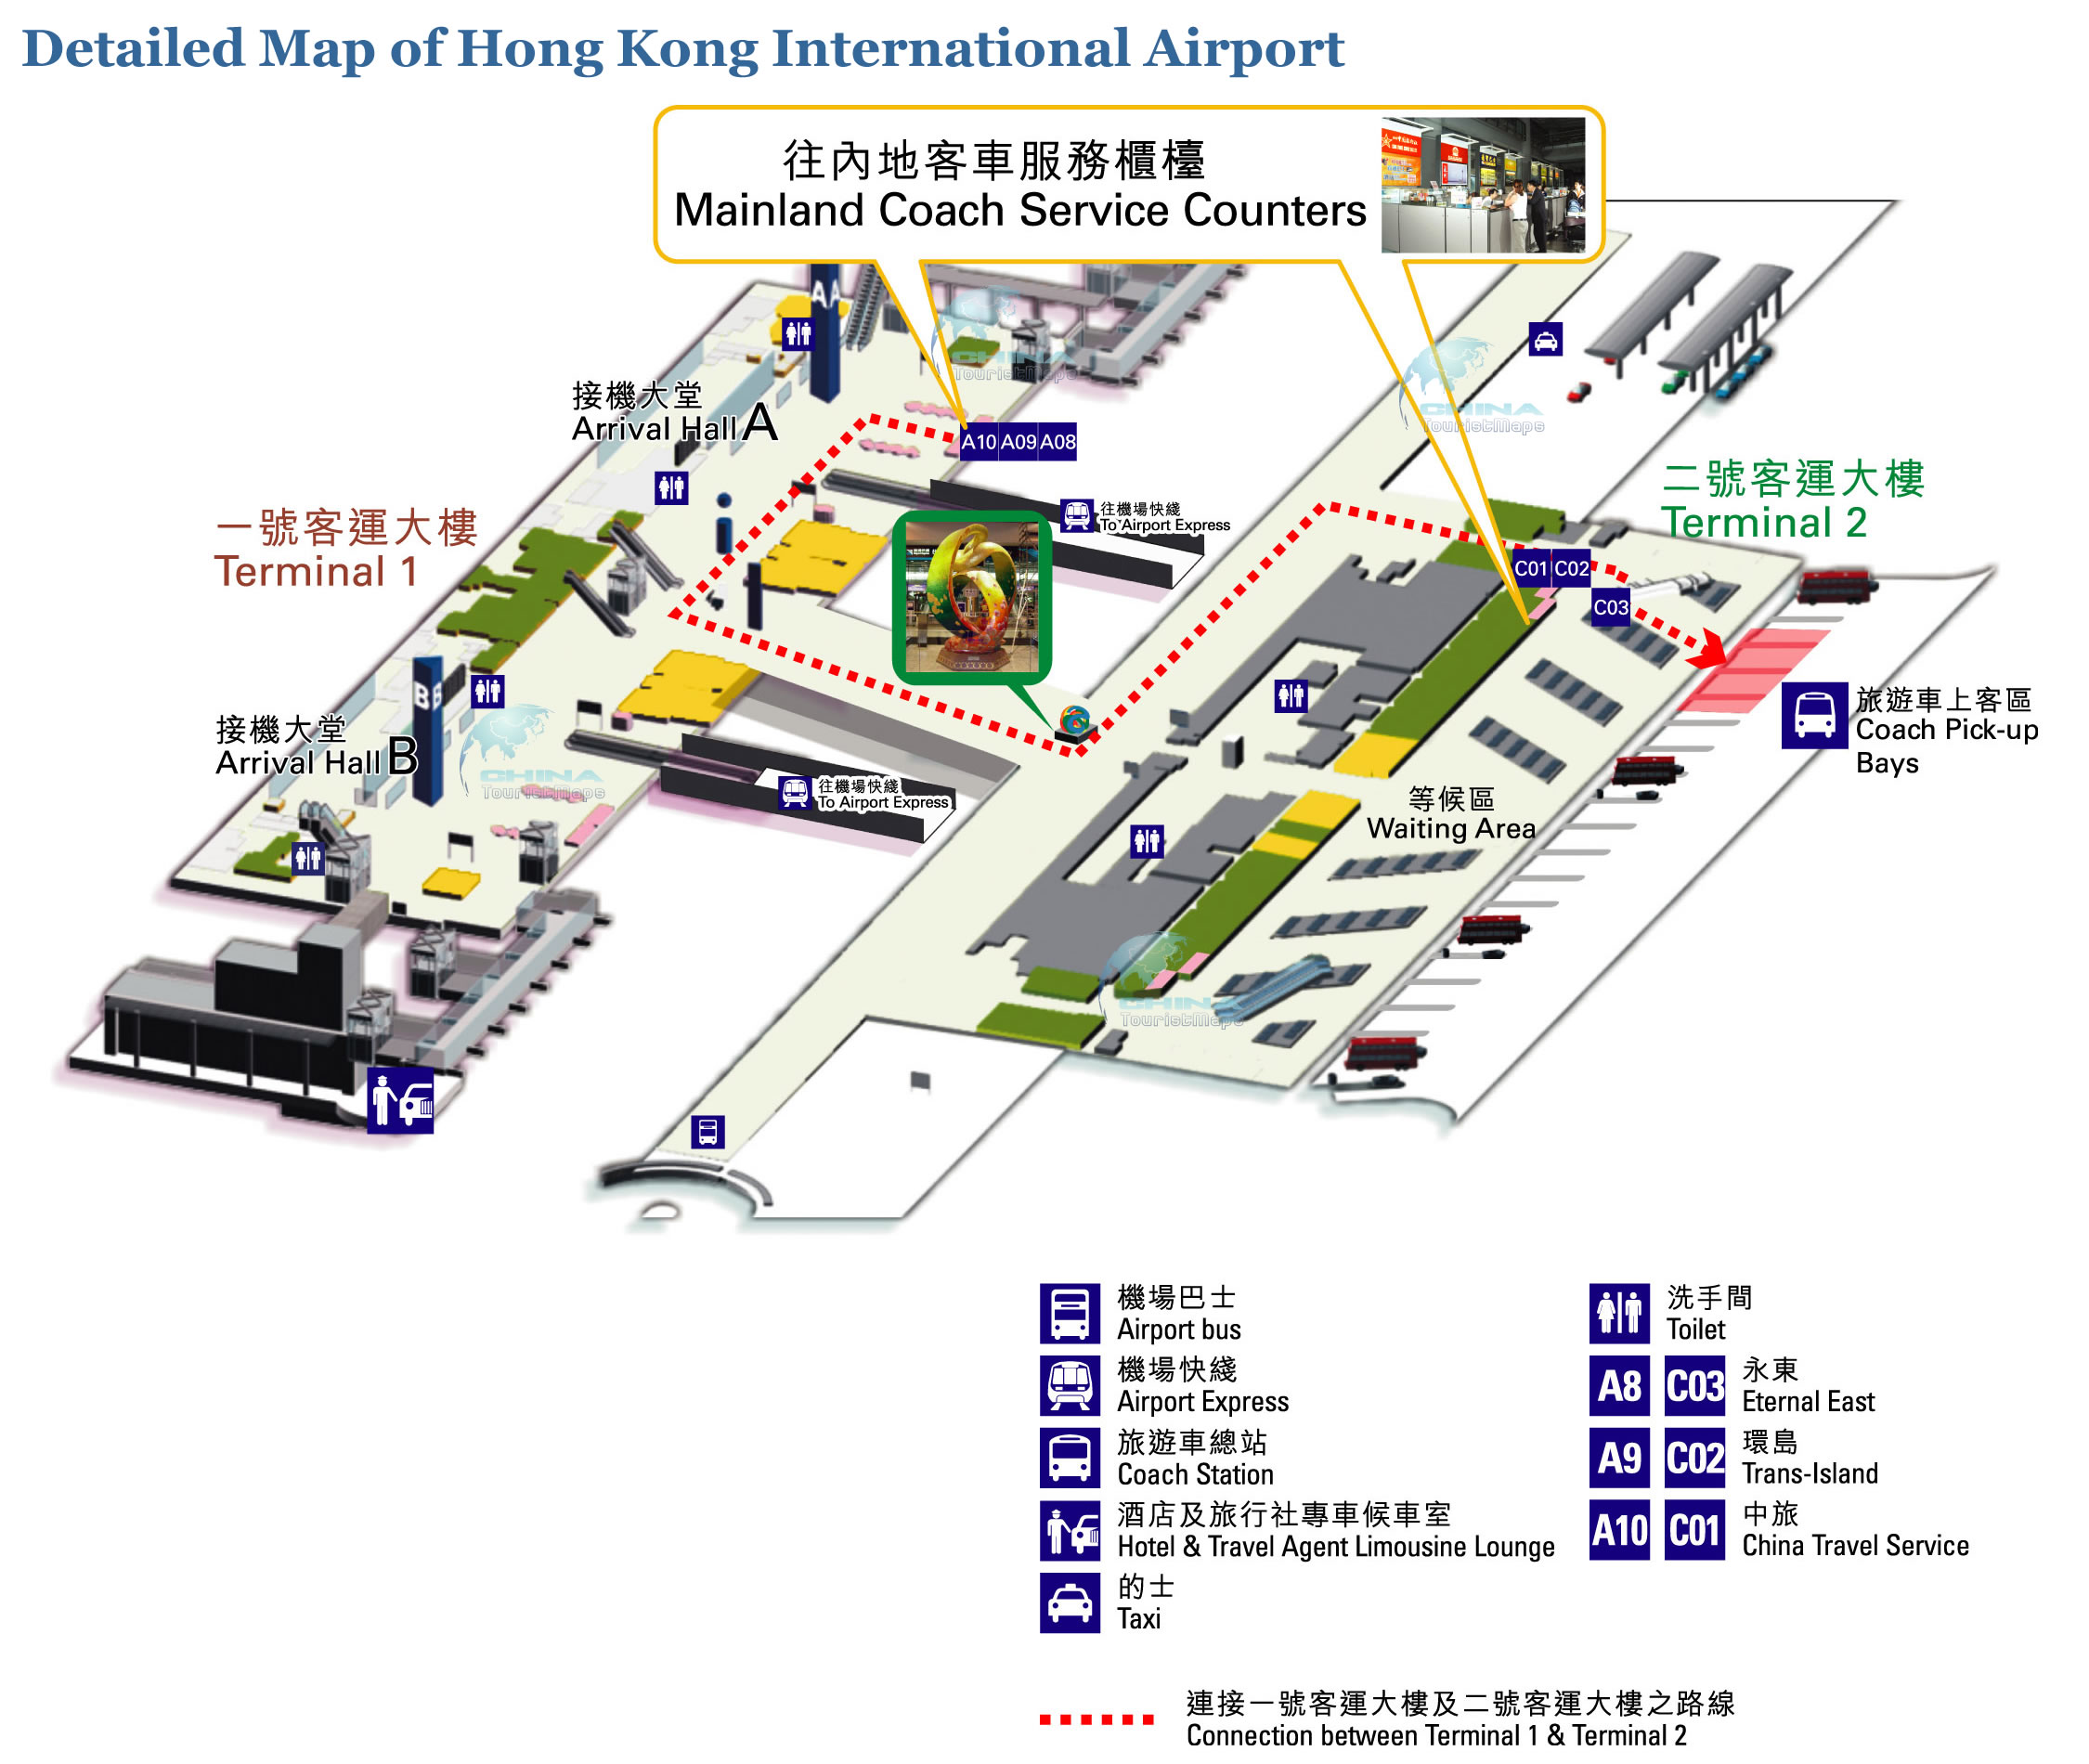 Hong Kong Airport Arrivals, Hong Kong Airport Departures